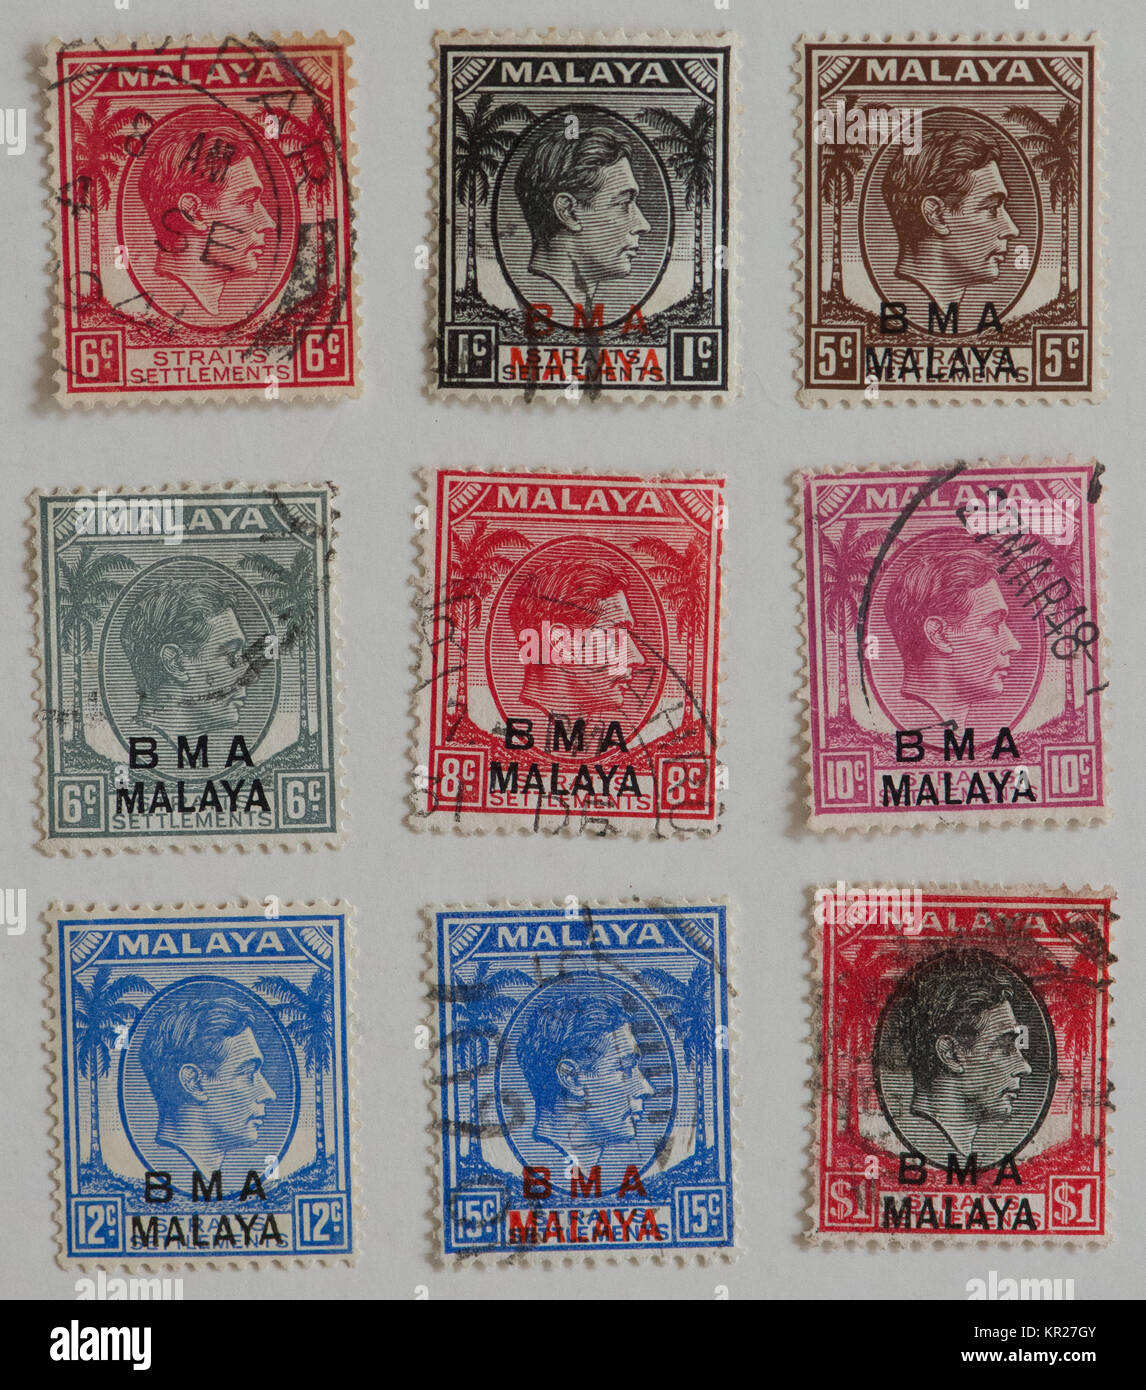 stamps from former british colony Malaya with overprint BMA Malaya Stock Photo